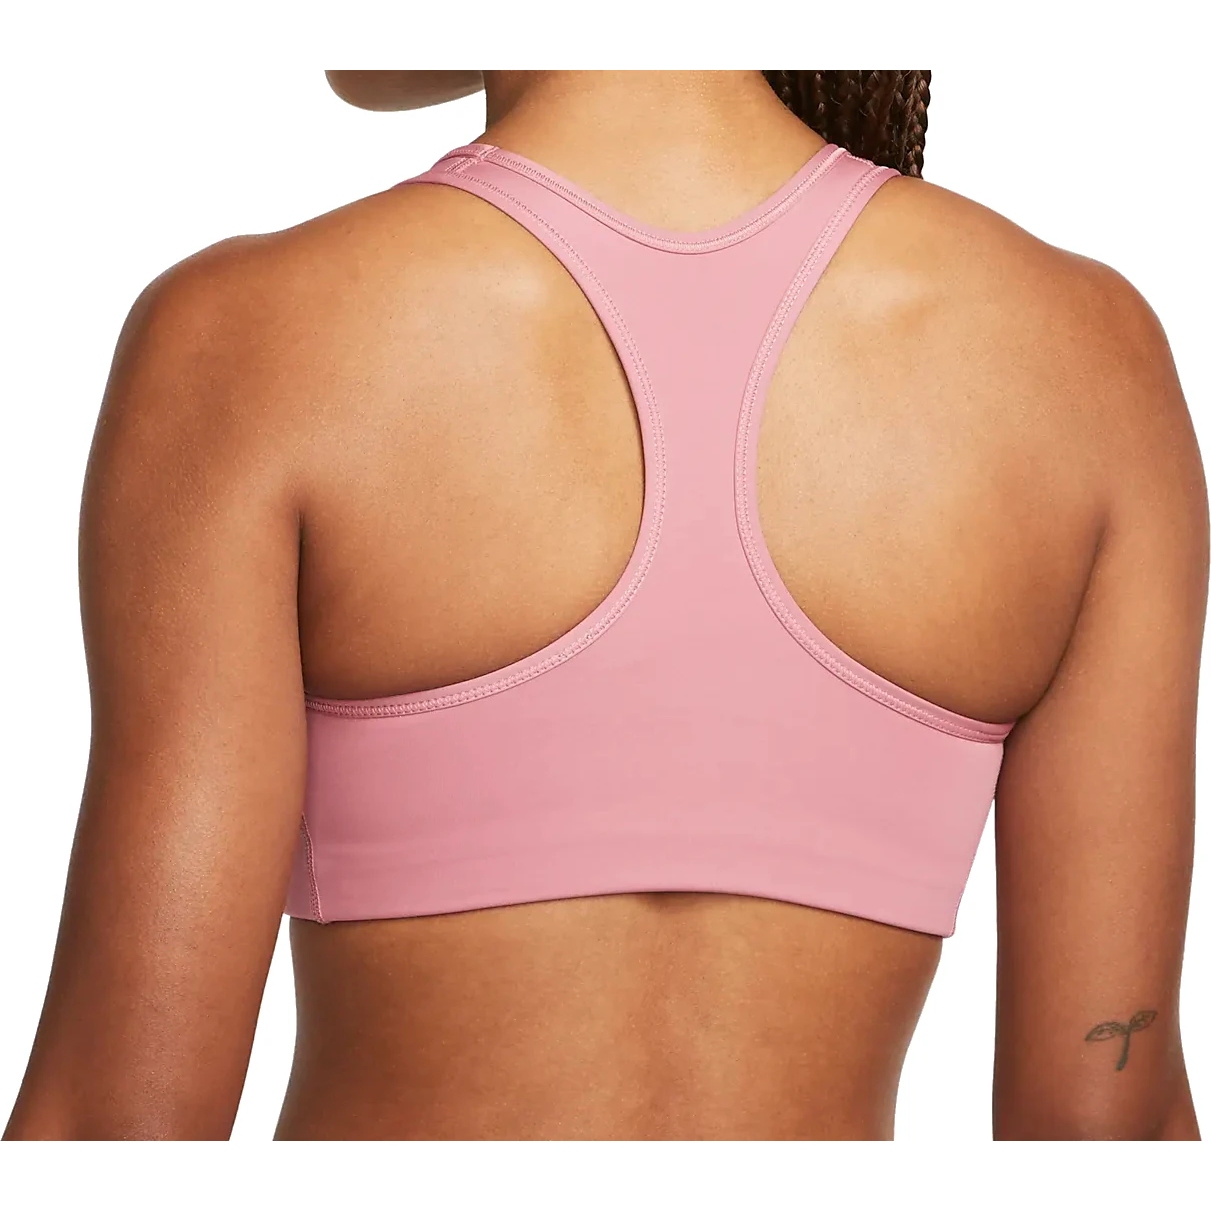 Nike Swoosh Medium-Support 1-Piece Pad Sports Bra Women - black/white  BV3636-010